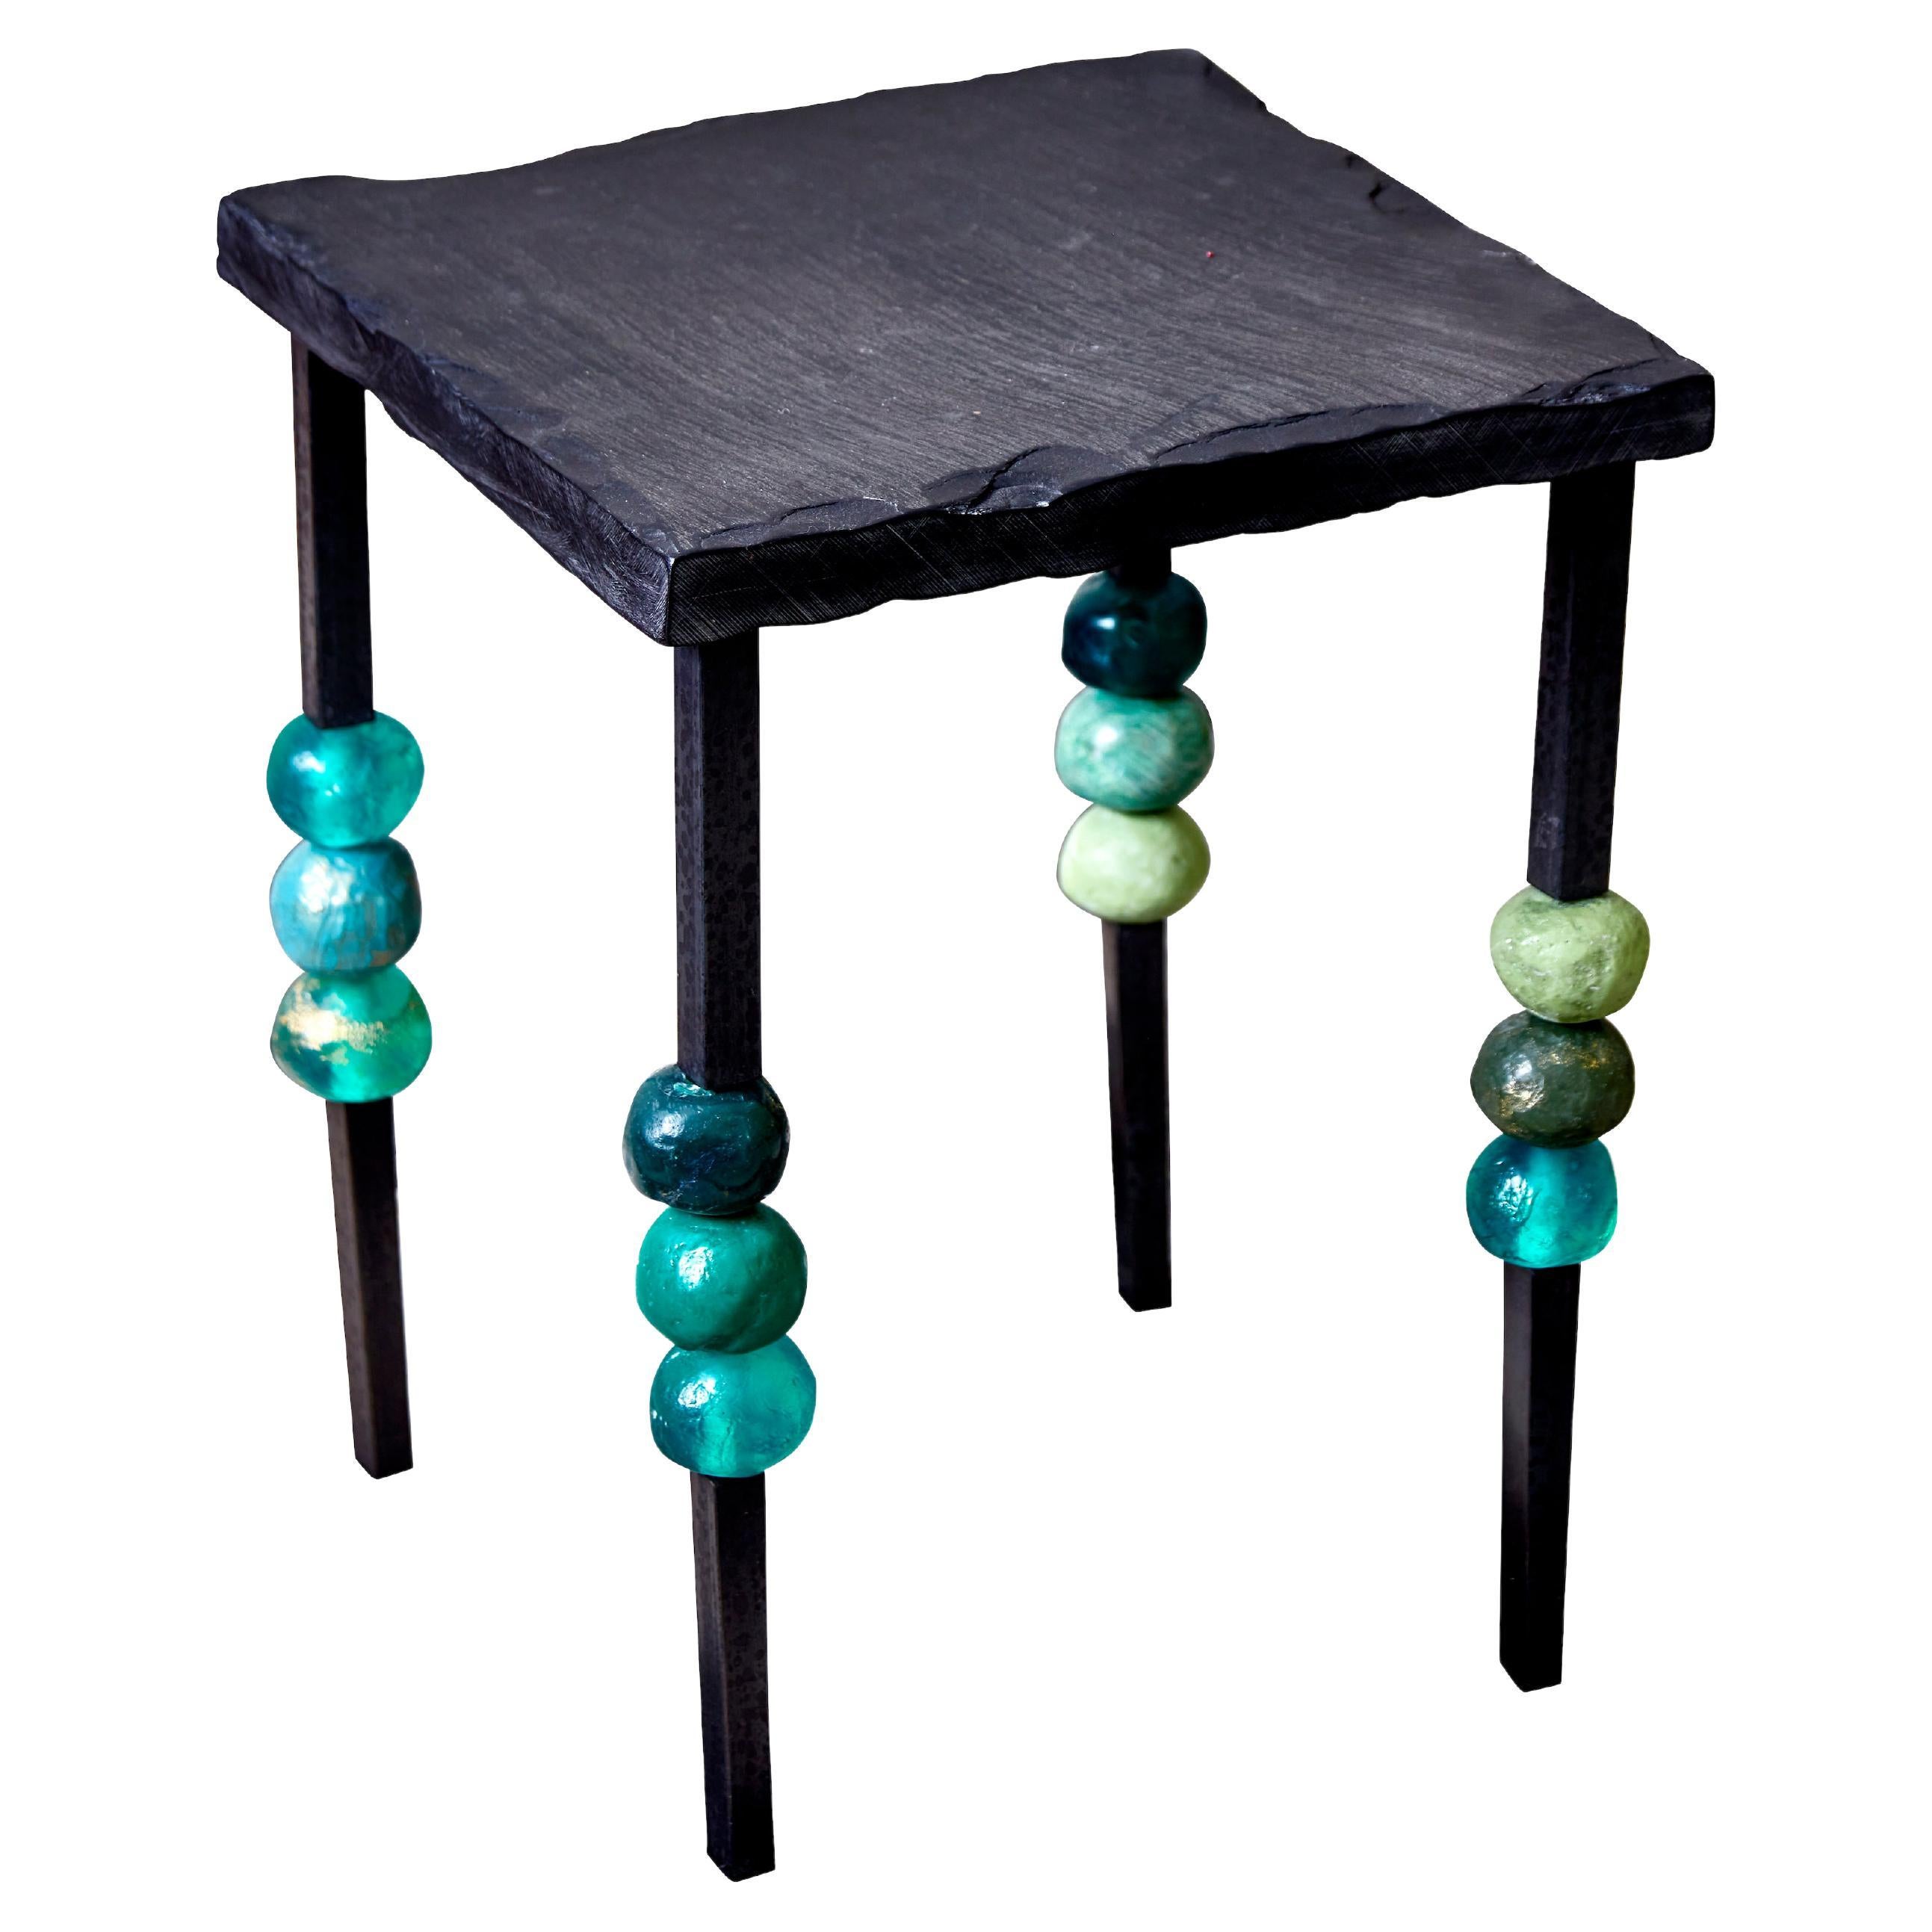 European Contemporary Side Table, Green Details, Slate by Margit Wittig